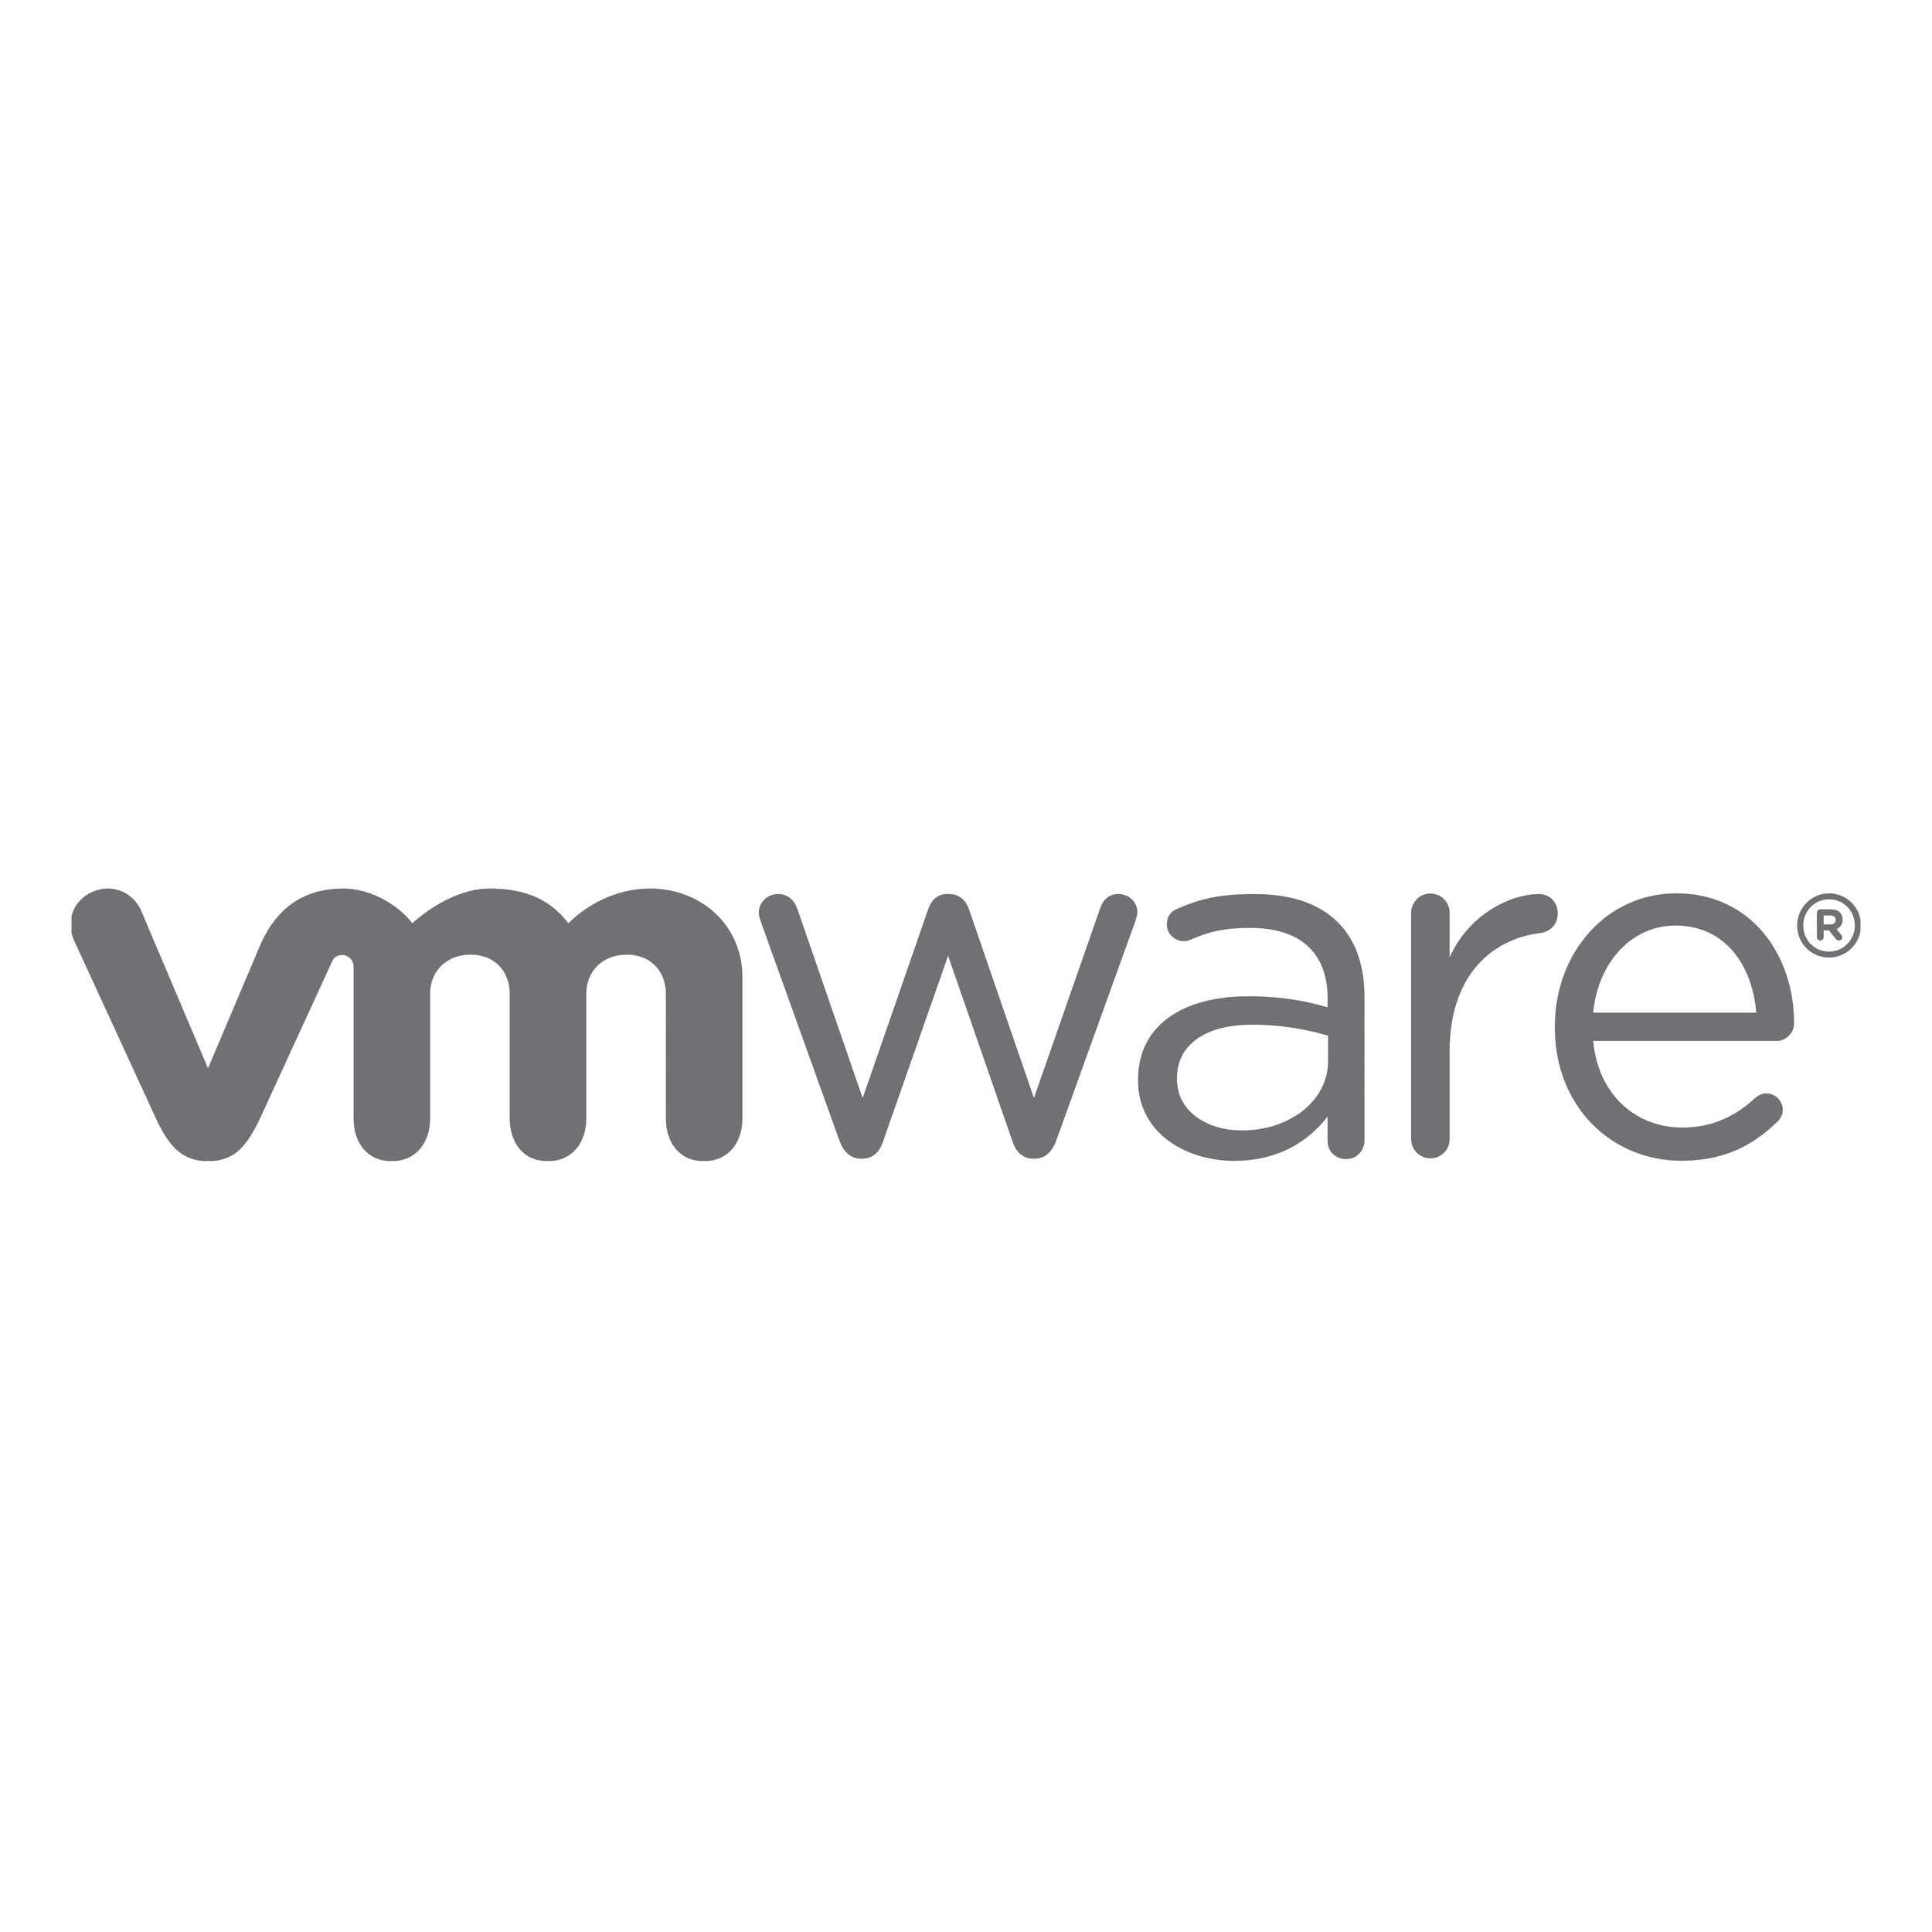 VMware-logo.png